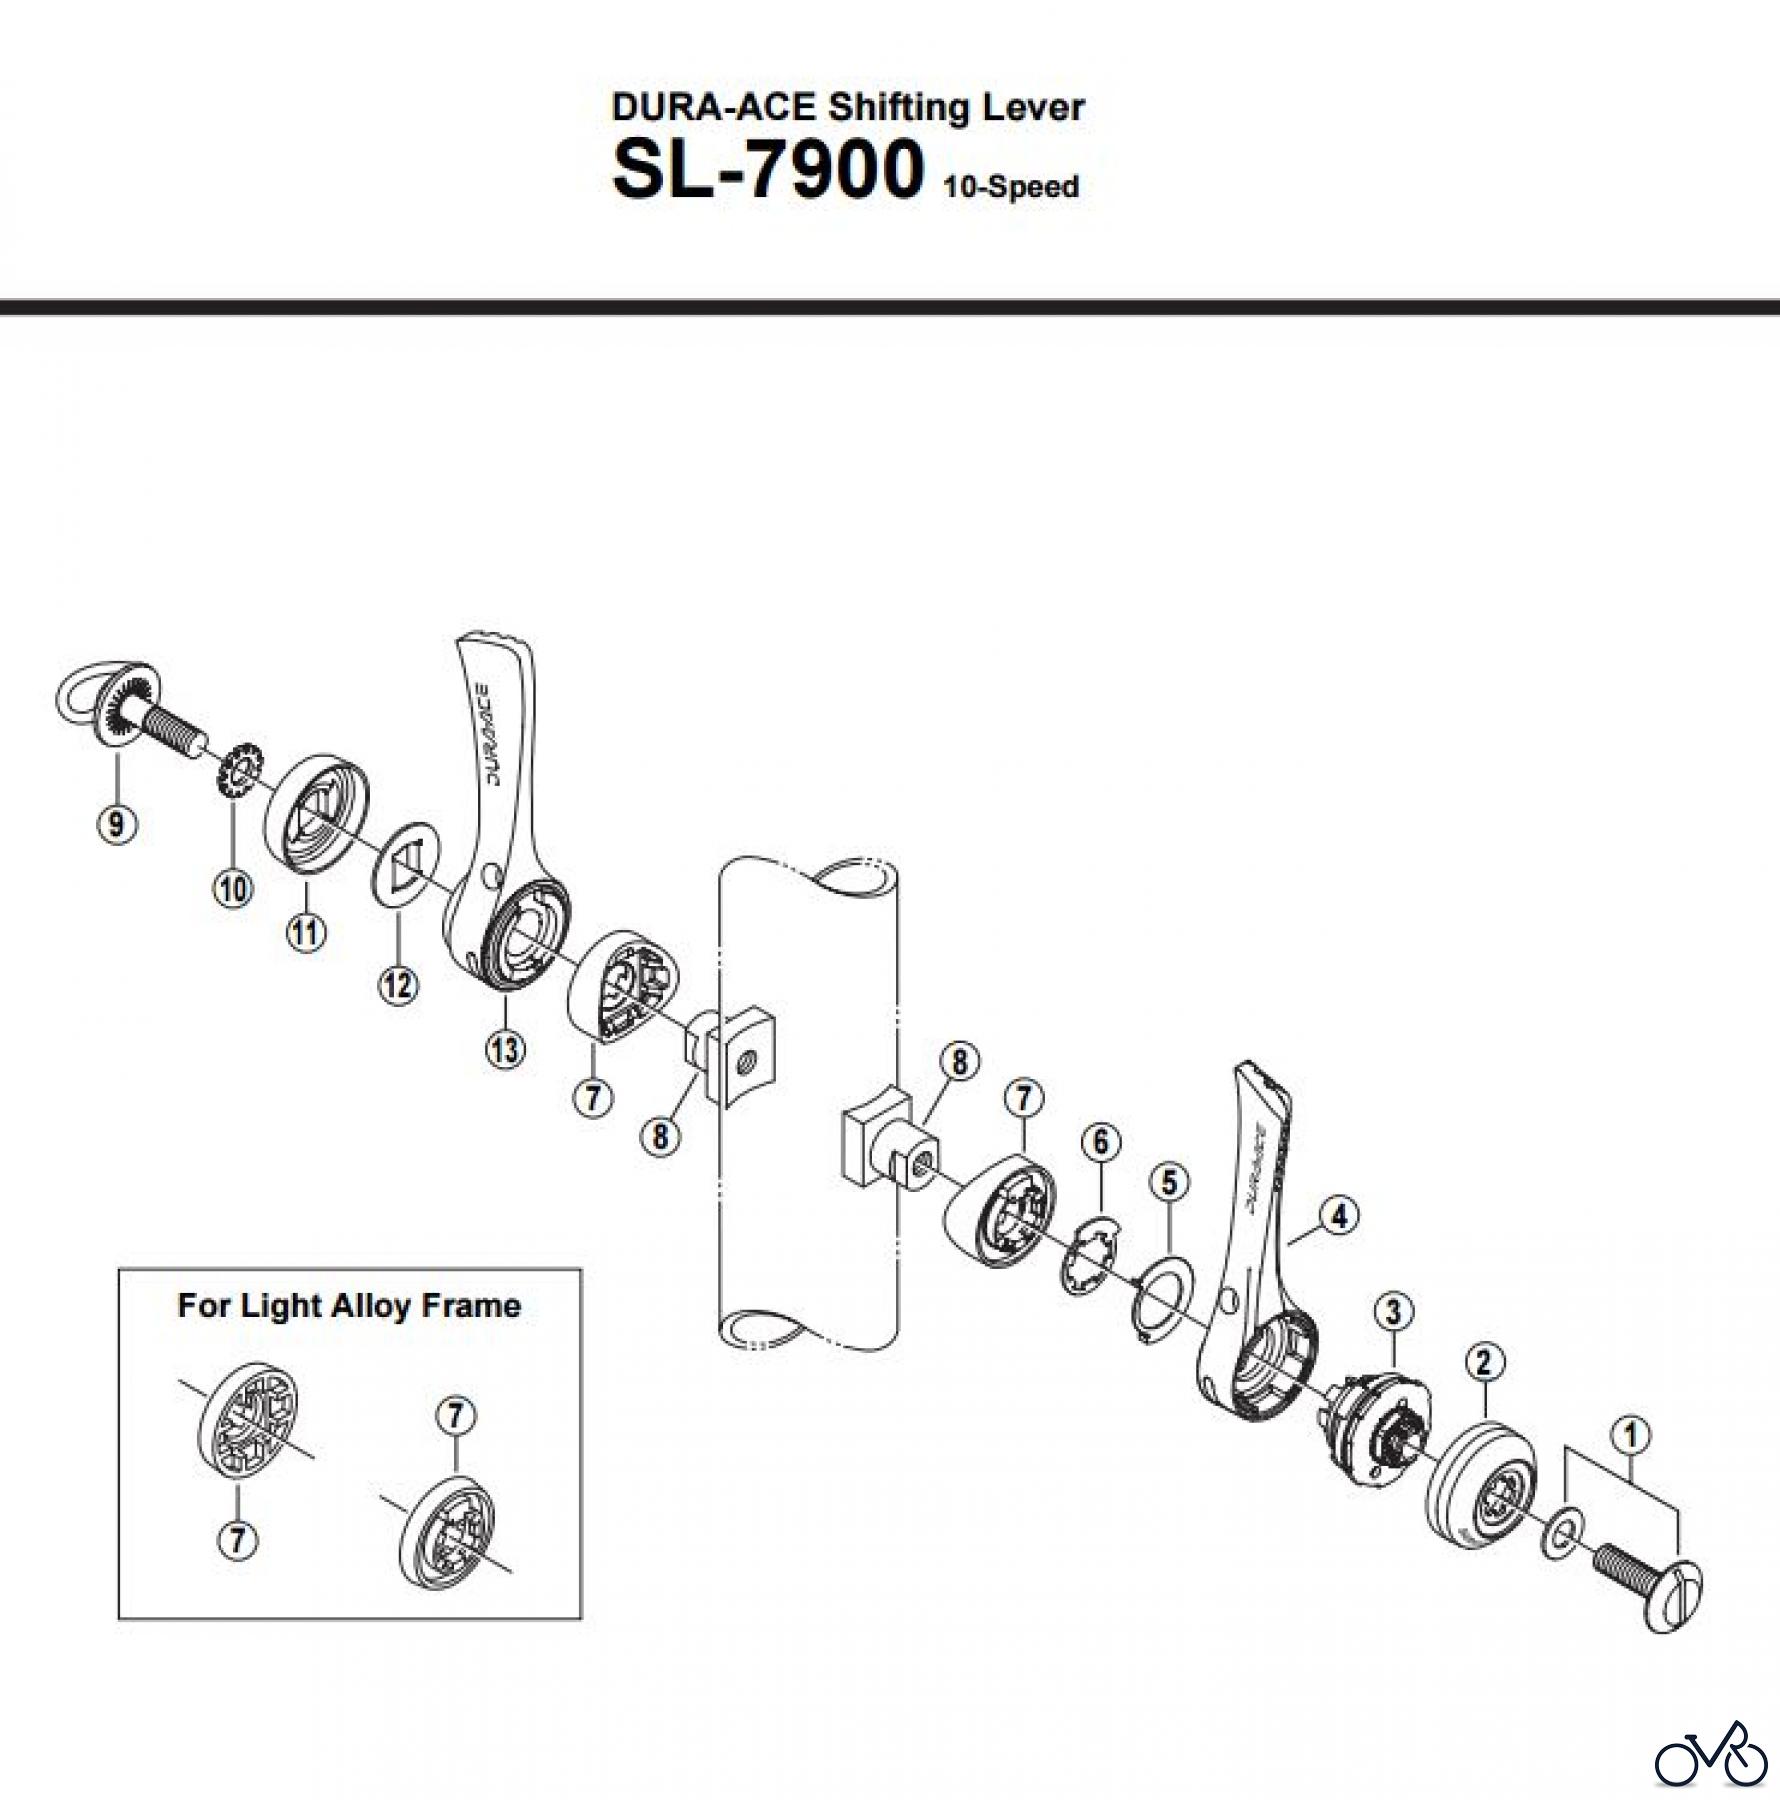  Shimano SL Shift Lever - Schalthebel SL-7900 DURA-ACE Shifting Lever